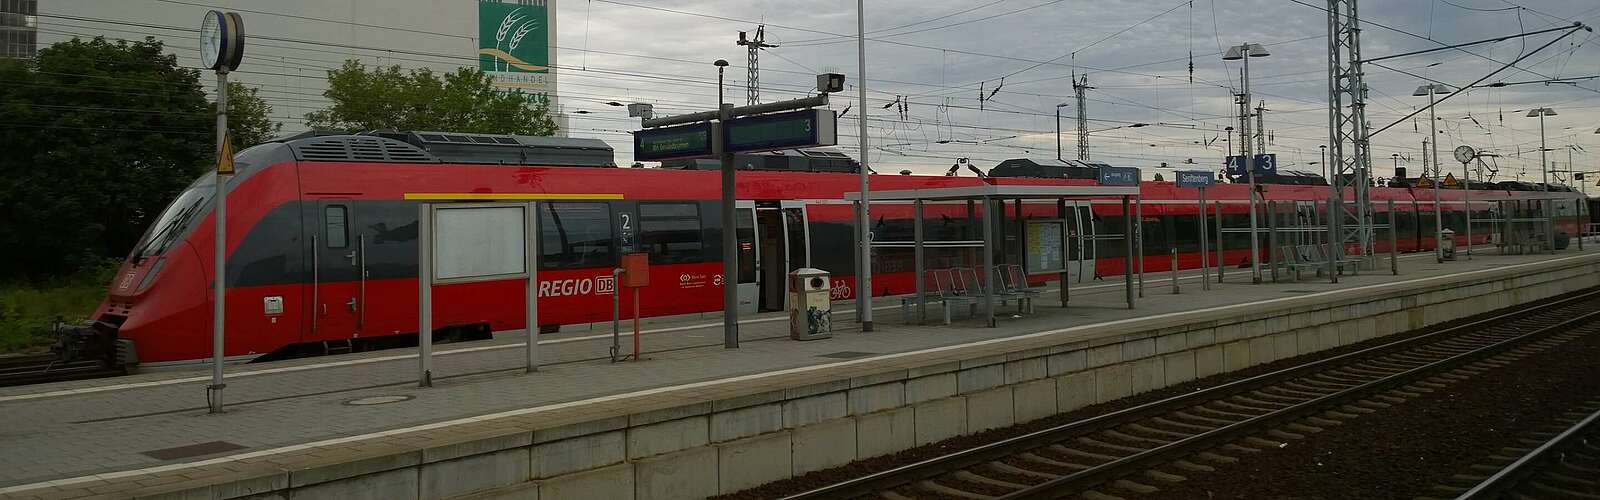 Regionalzug am Bahnhof Senftenberg,
        
    

        Foto: TMB-Fotoarchiv/Matthias Fricke